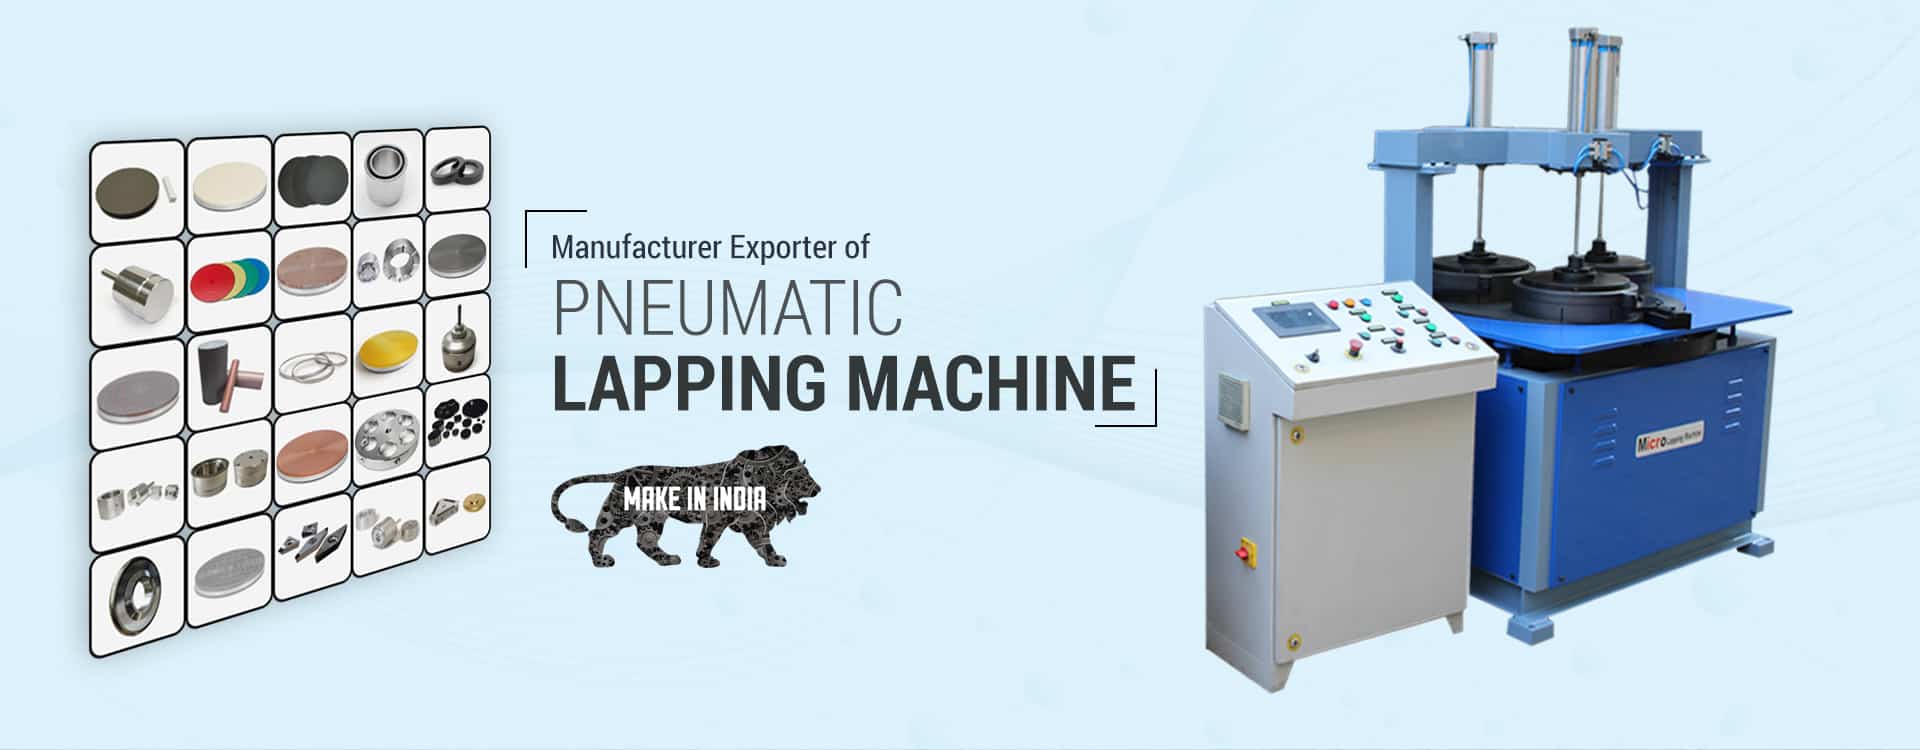 Pneumatic Lapping Machine Manufacturer